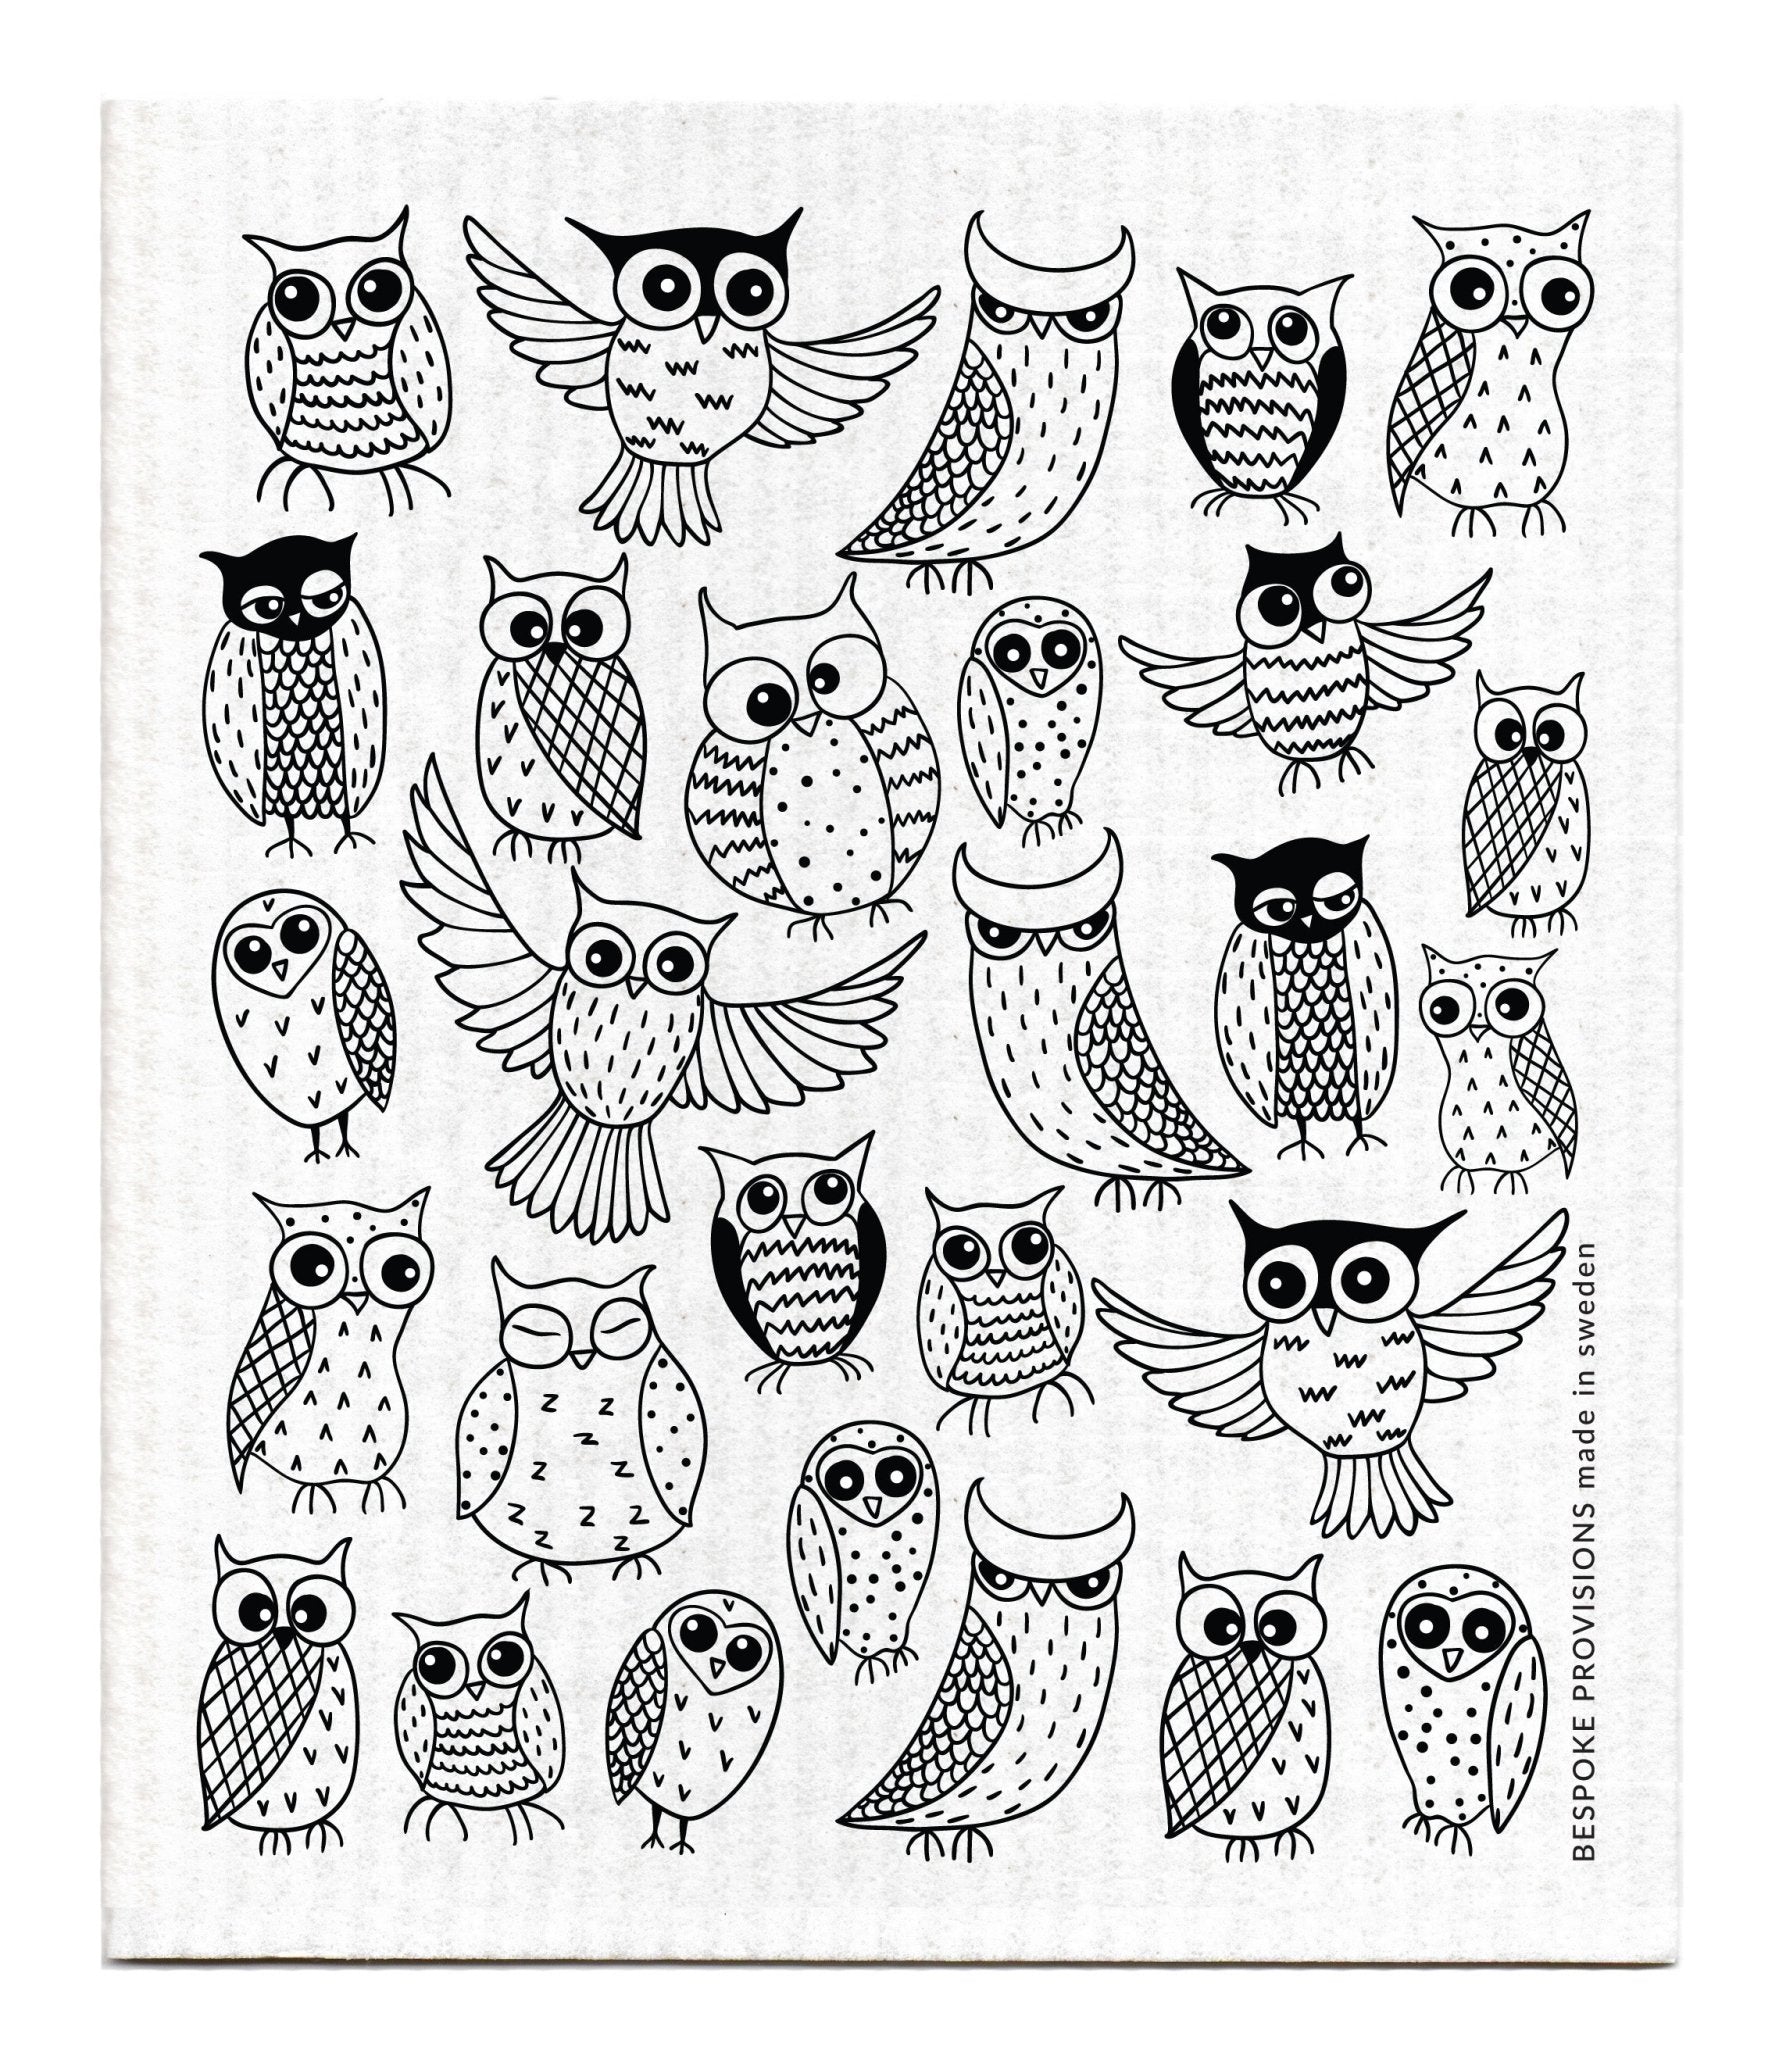 Owls Swedish Dishcloth - BESPOKE PROVISIONS